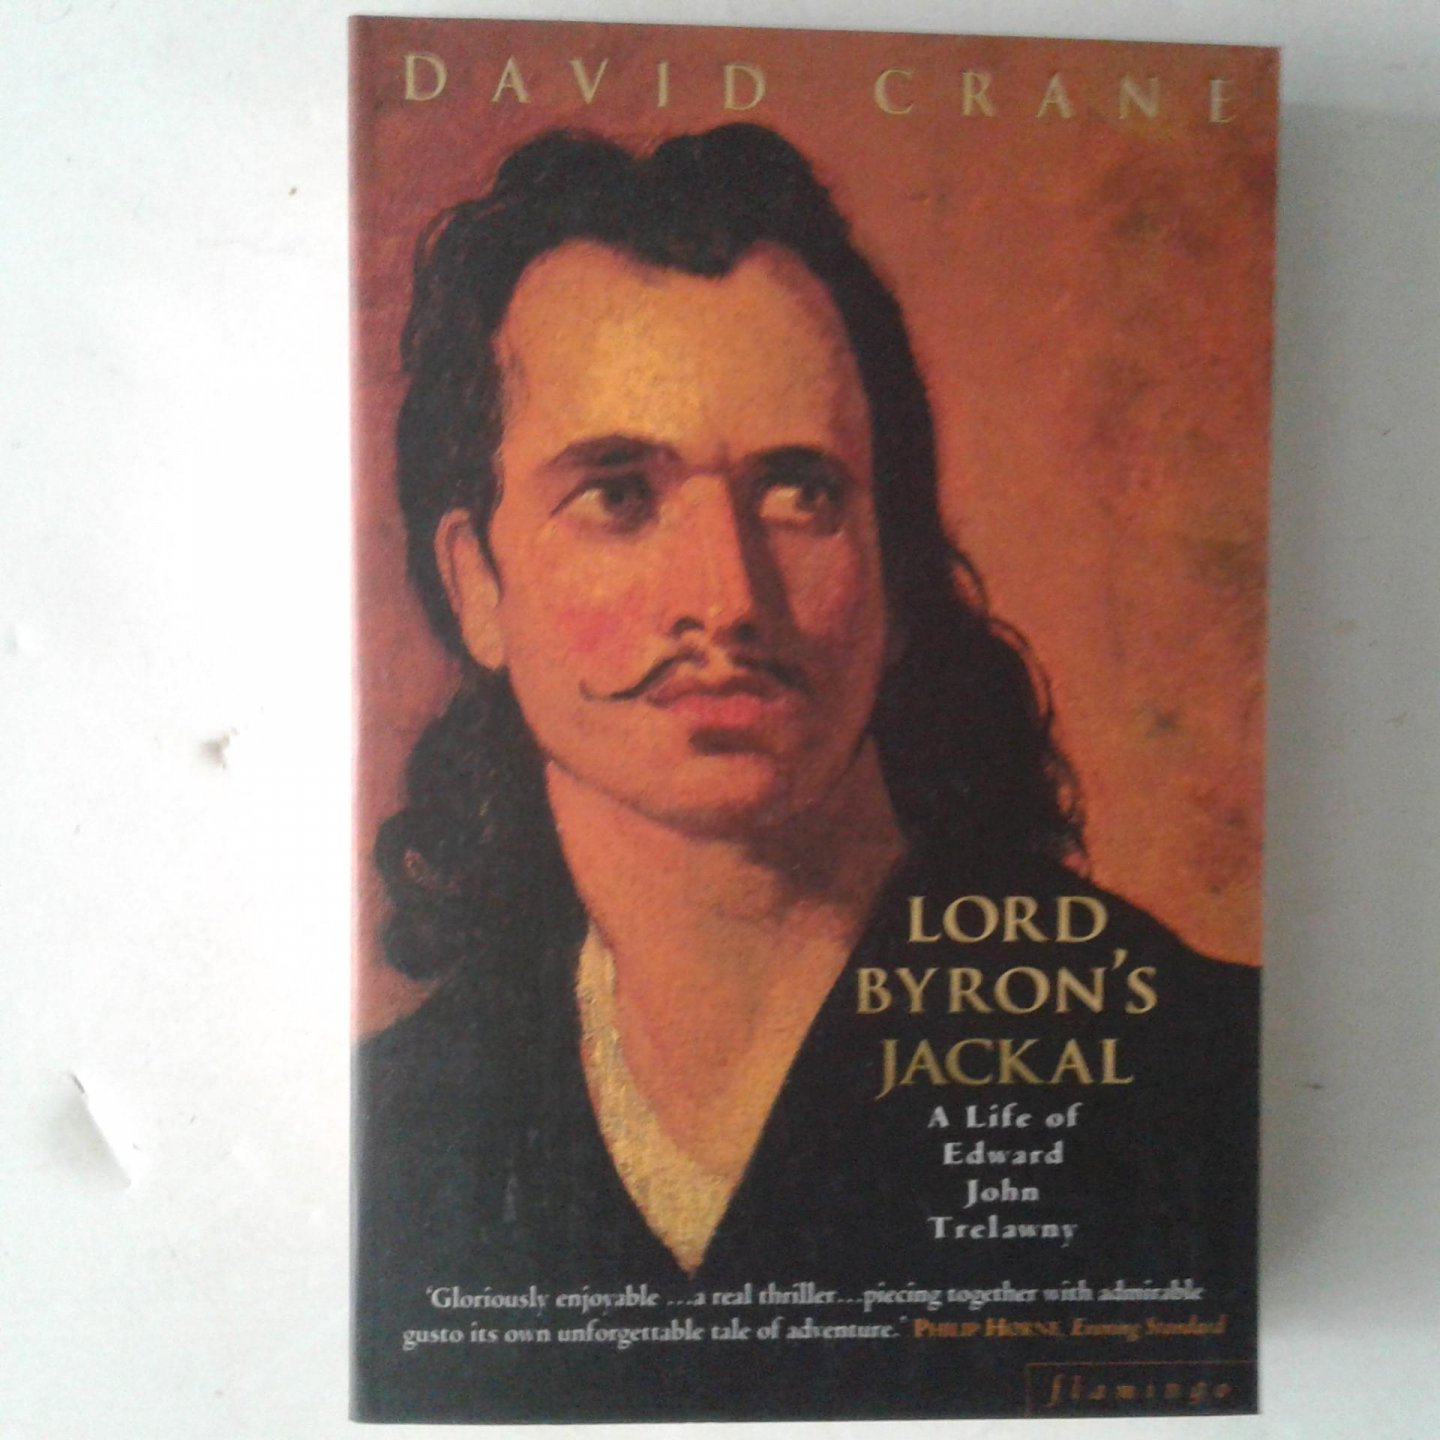 Crane, David - Lord Byron's Jackal ; A Life of Edward John Trelawny